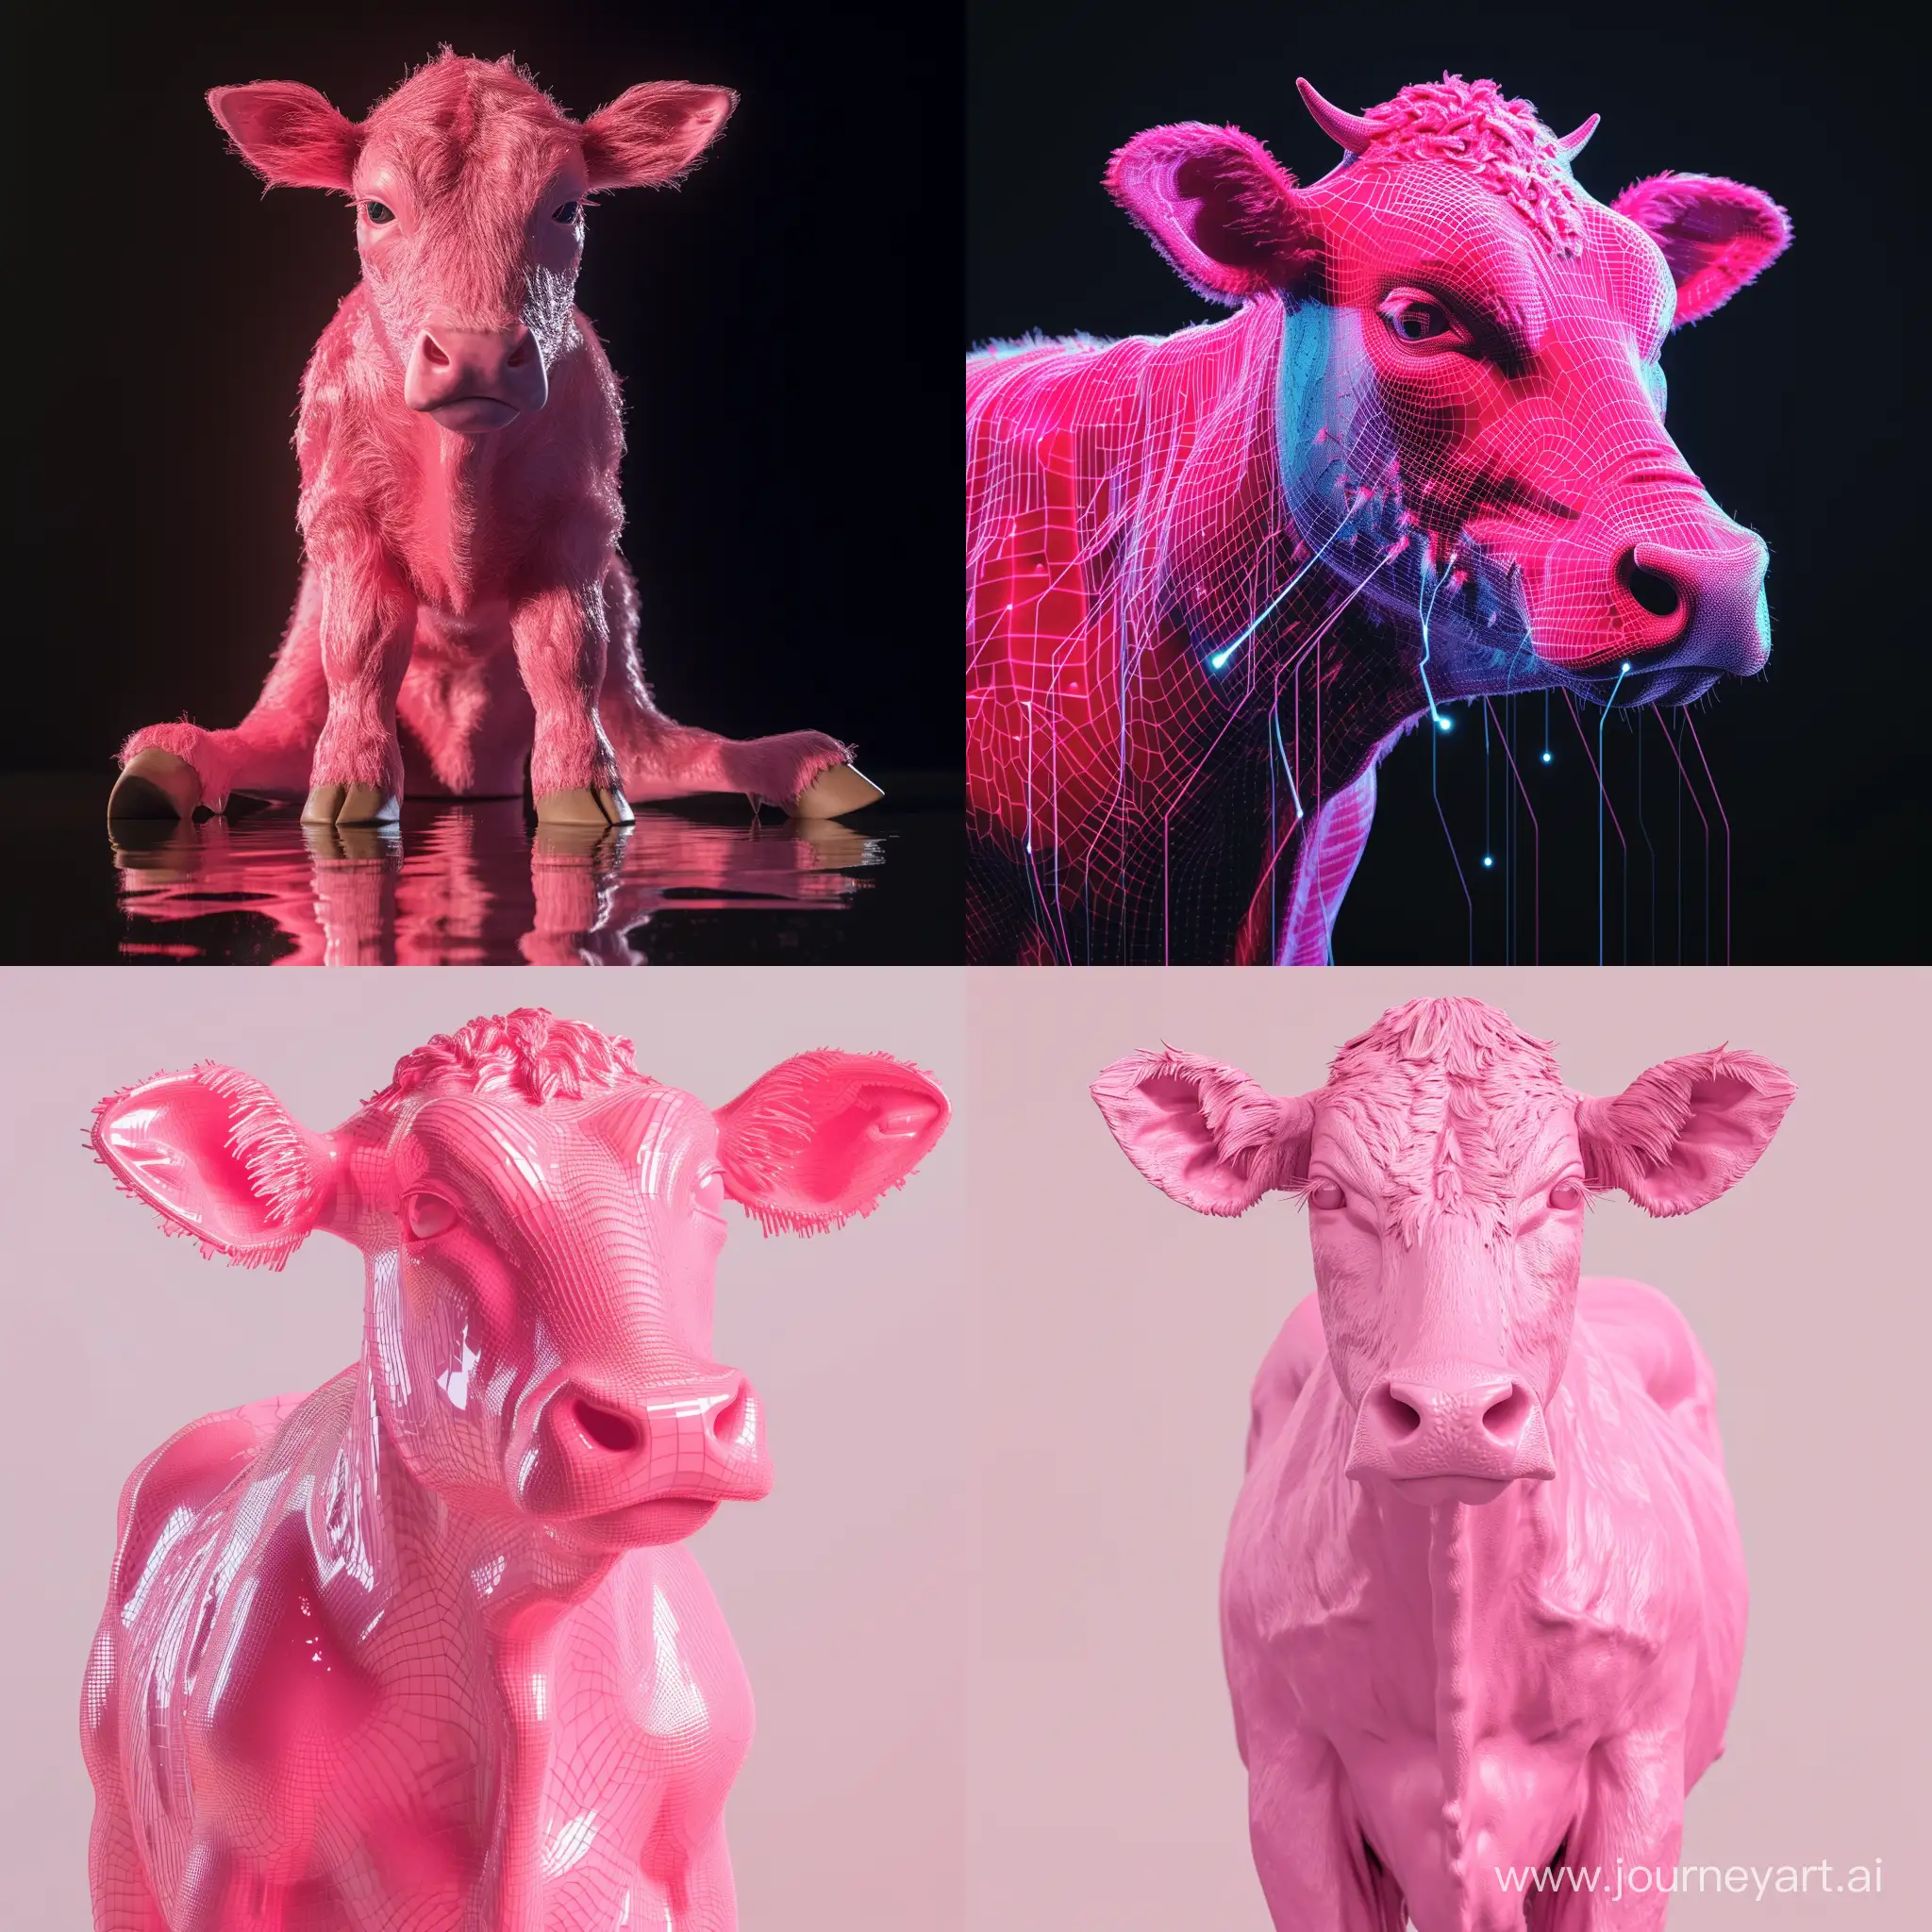 a realistic pink cow, web3 tech, AI